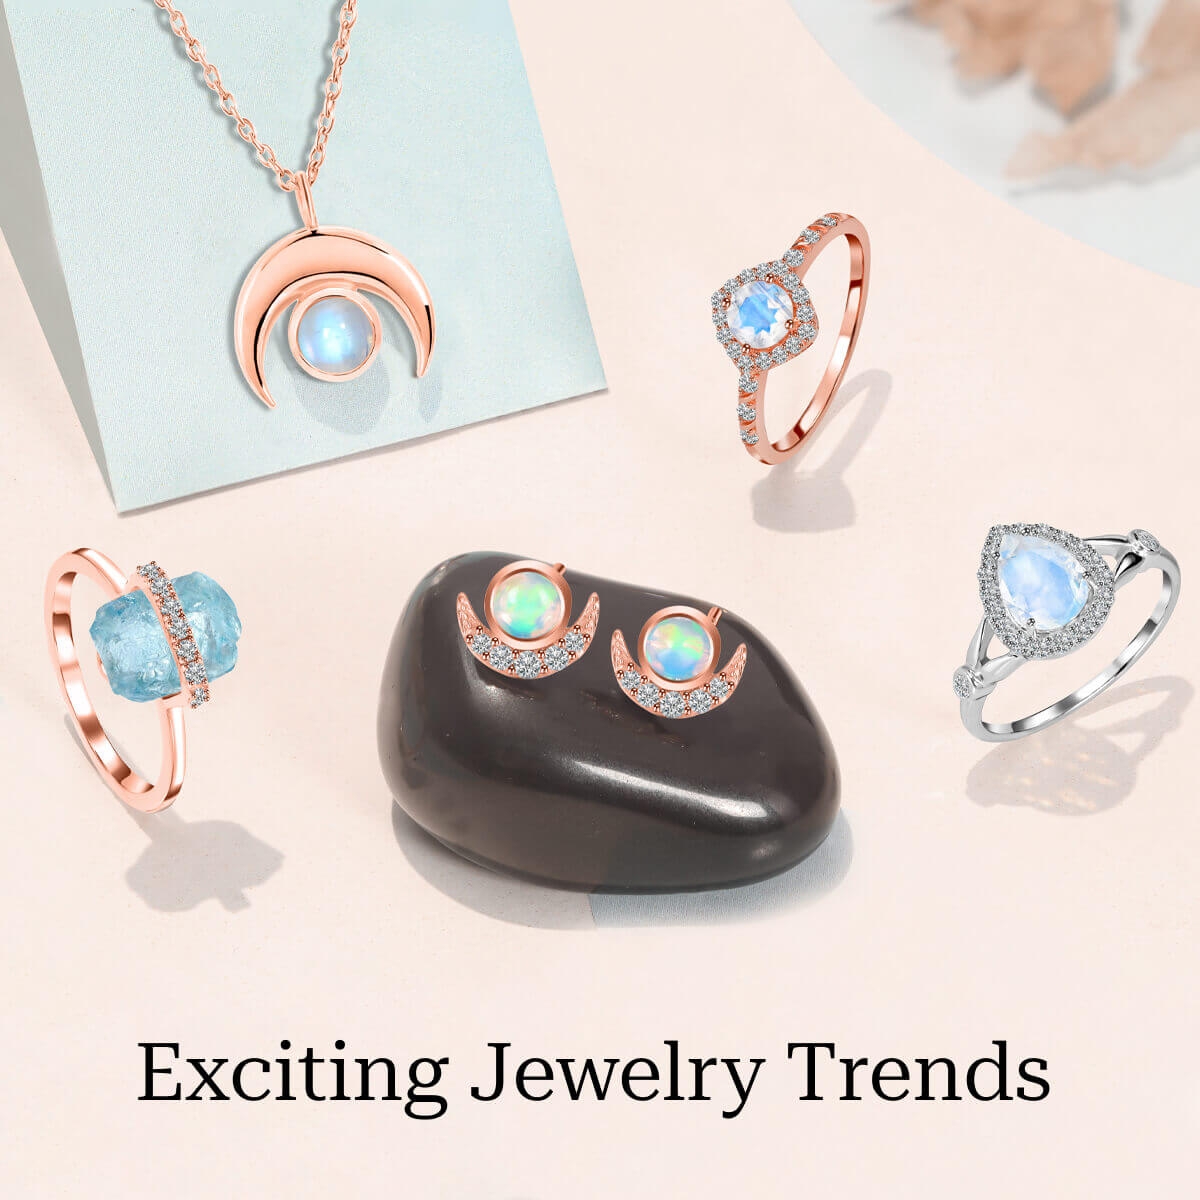 Jewelry Trends 